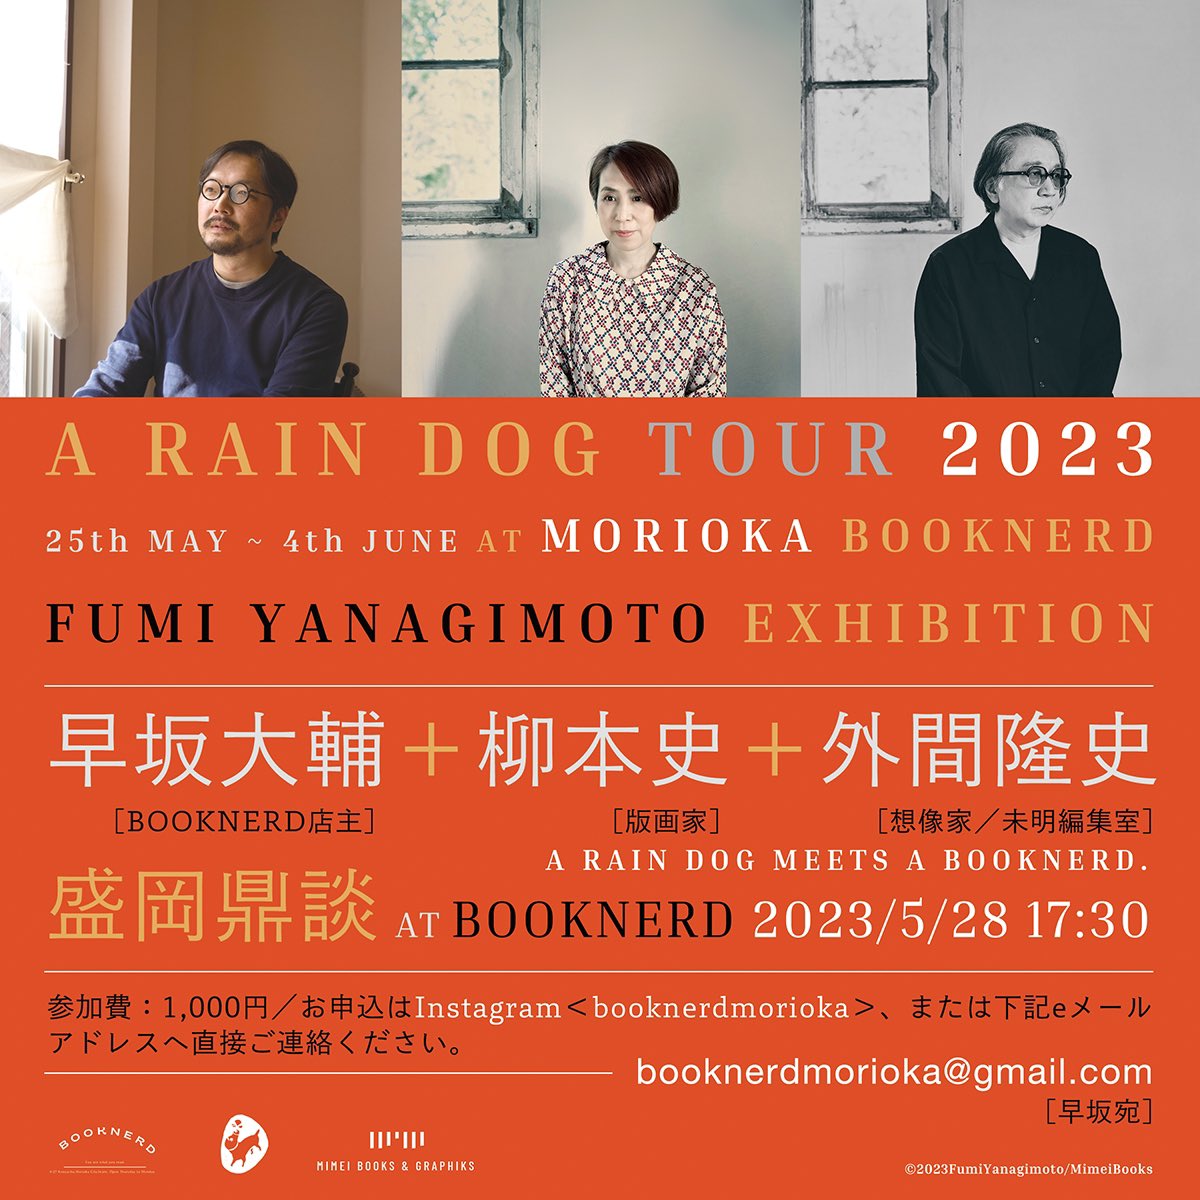 【A RAIN DOG TOUR 2023】 『雨犬』刊行記念 柳本史版画展 盛岡ブックナード 5/25（木）〜6/4（日） 老犬が参ります。 5/28は版画家・柳本史さん＆想像家・外間隆史が盛岡へ赴きブックナード店主・早坂大輔氏と鼎談を行います。 お時間あれば是非お運びください🐕 #booknerdmorioka #fumiyanagimoto